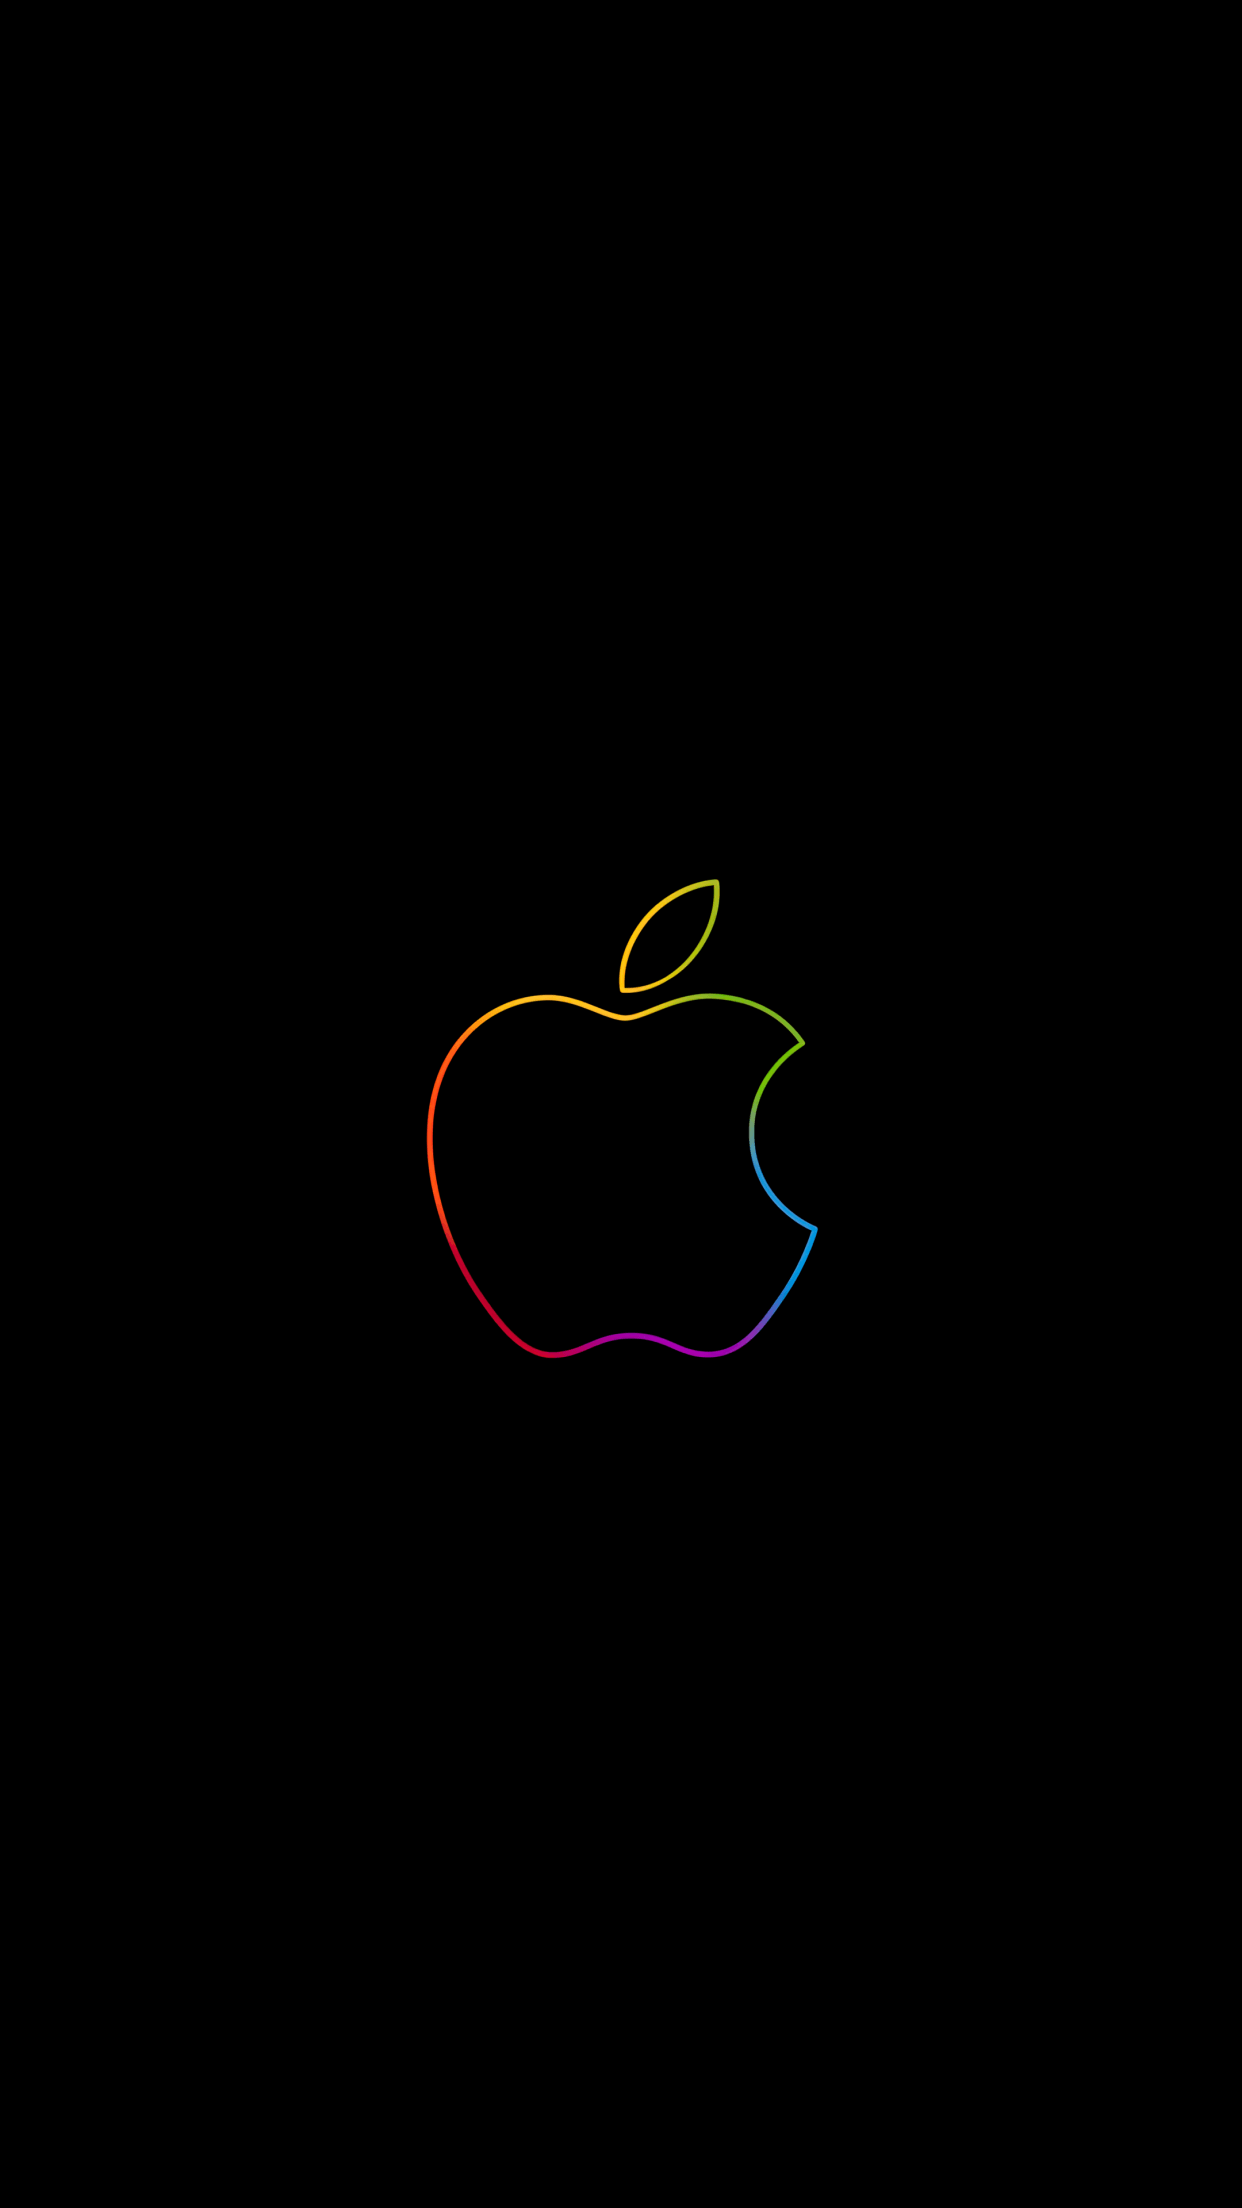 iOS Apple Logo Wallpapers - 4k, HD iOS Apple Logo Backgrounds on ...